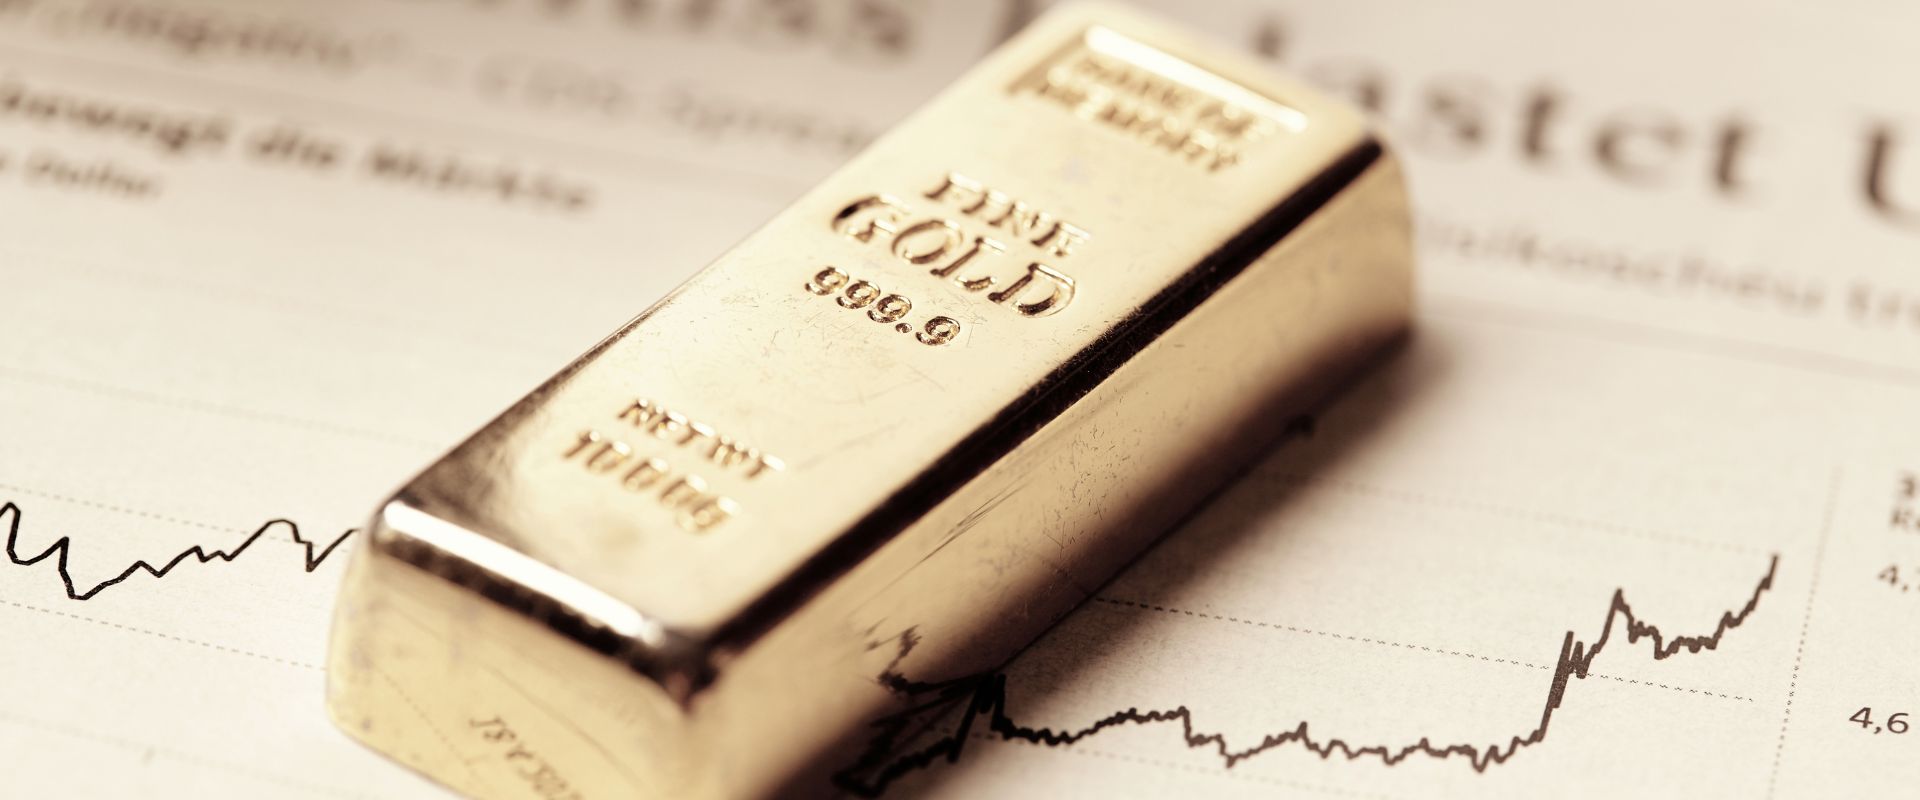 one kilogram of gold bar on rising price chart